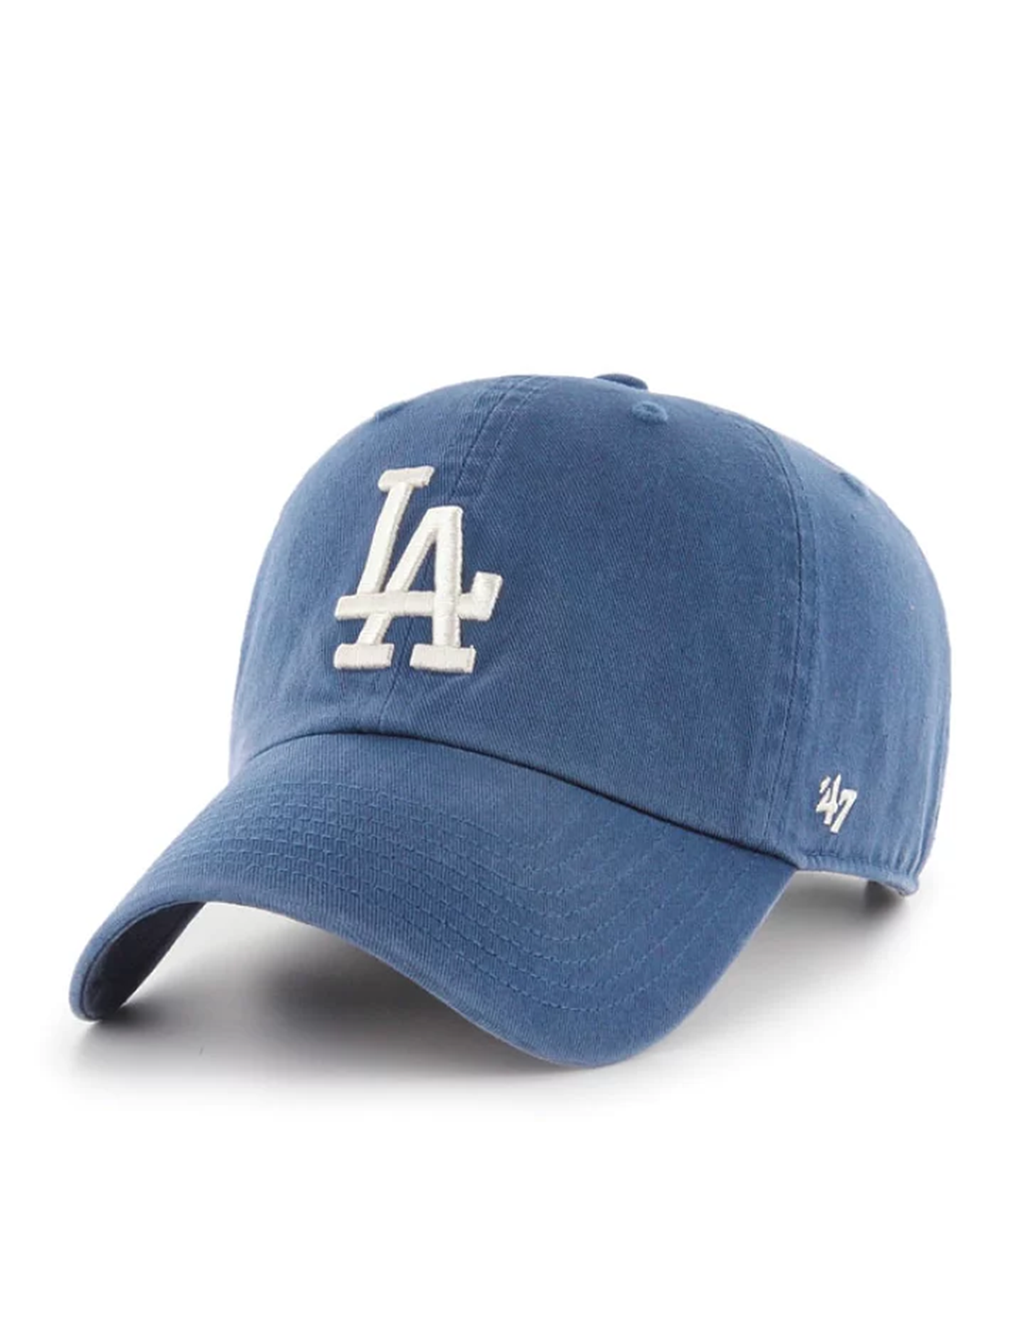 LA Dodgers Basic Ball Cap, Timber Blue/White